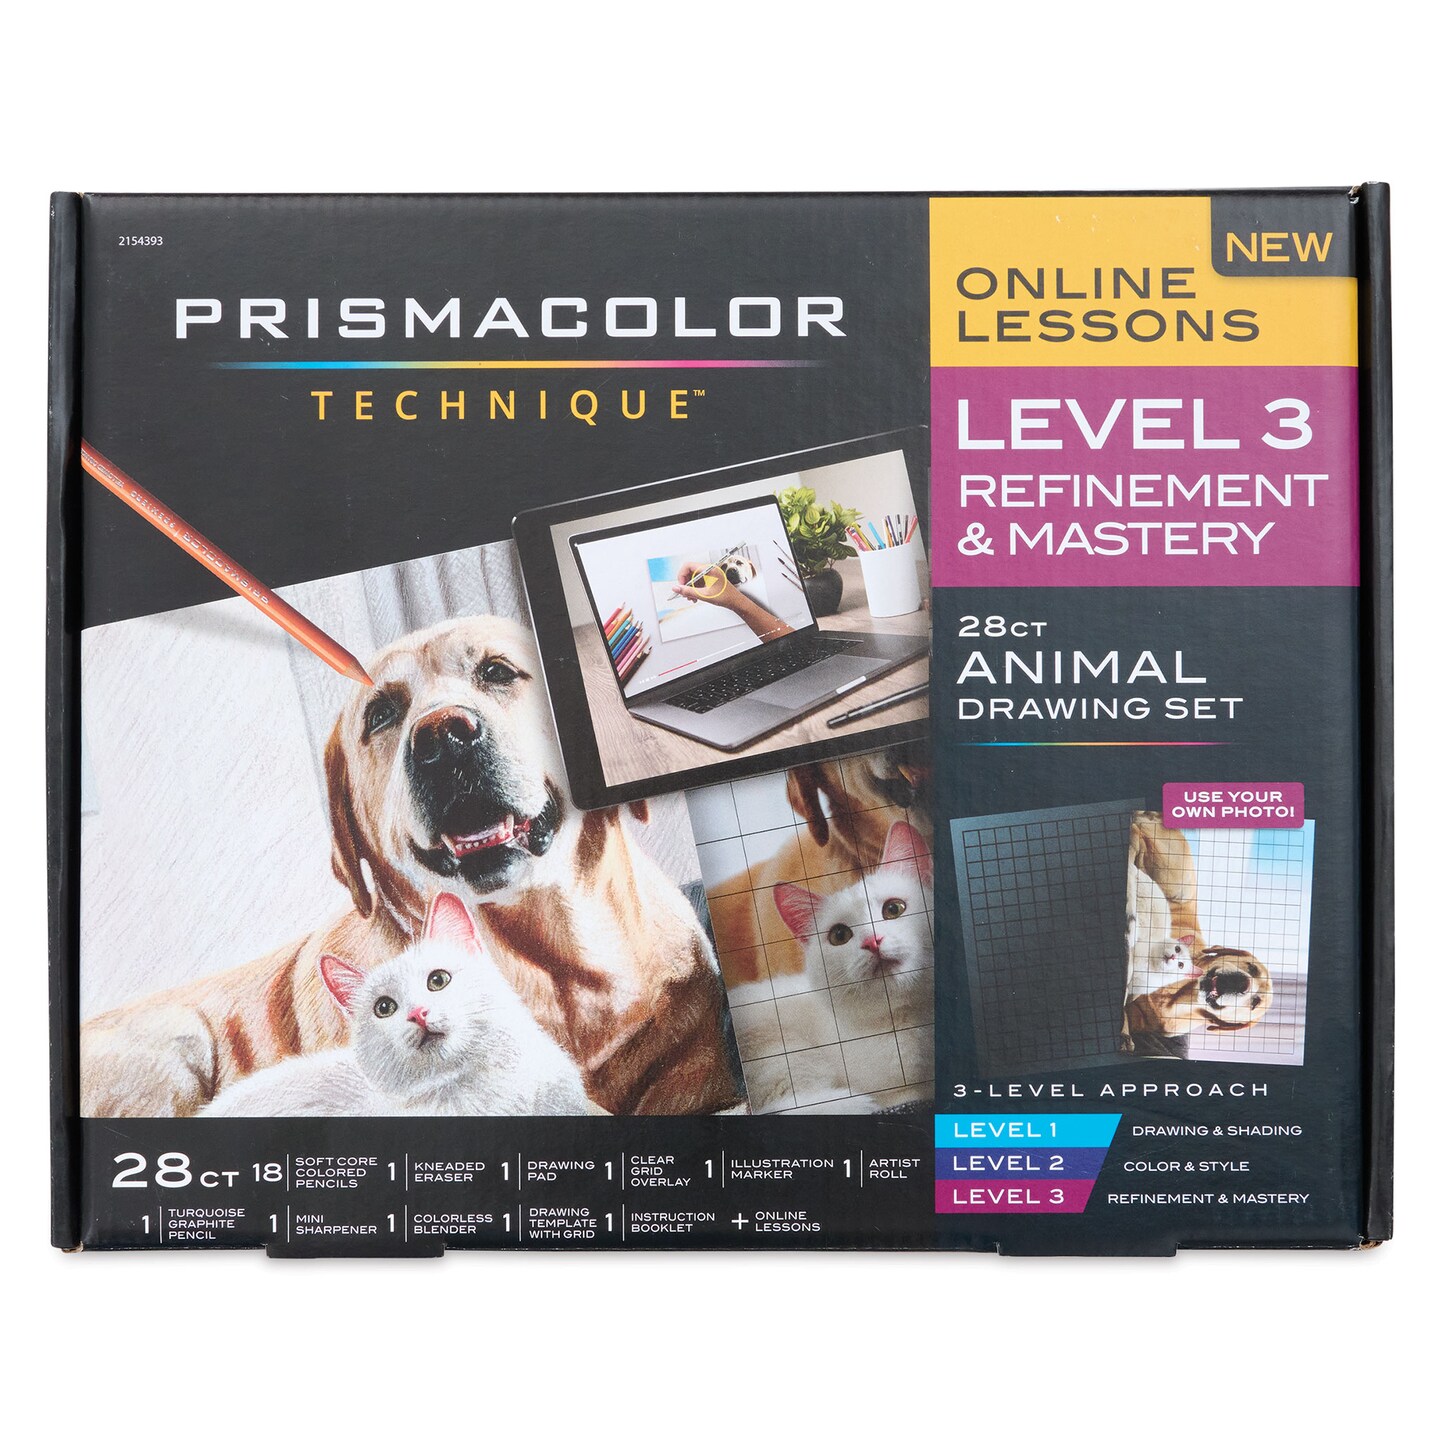 Prismacolor Technique Animal Drawing Set Level 3, Refinement and